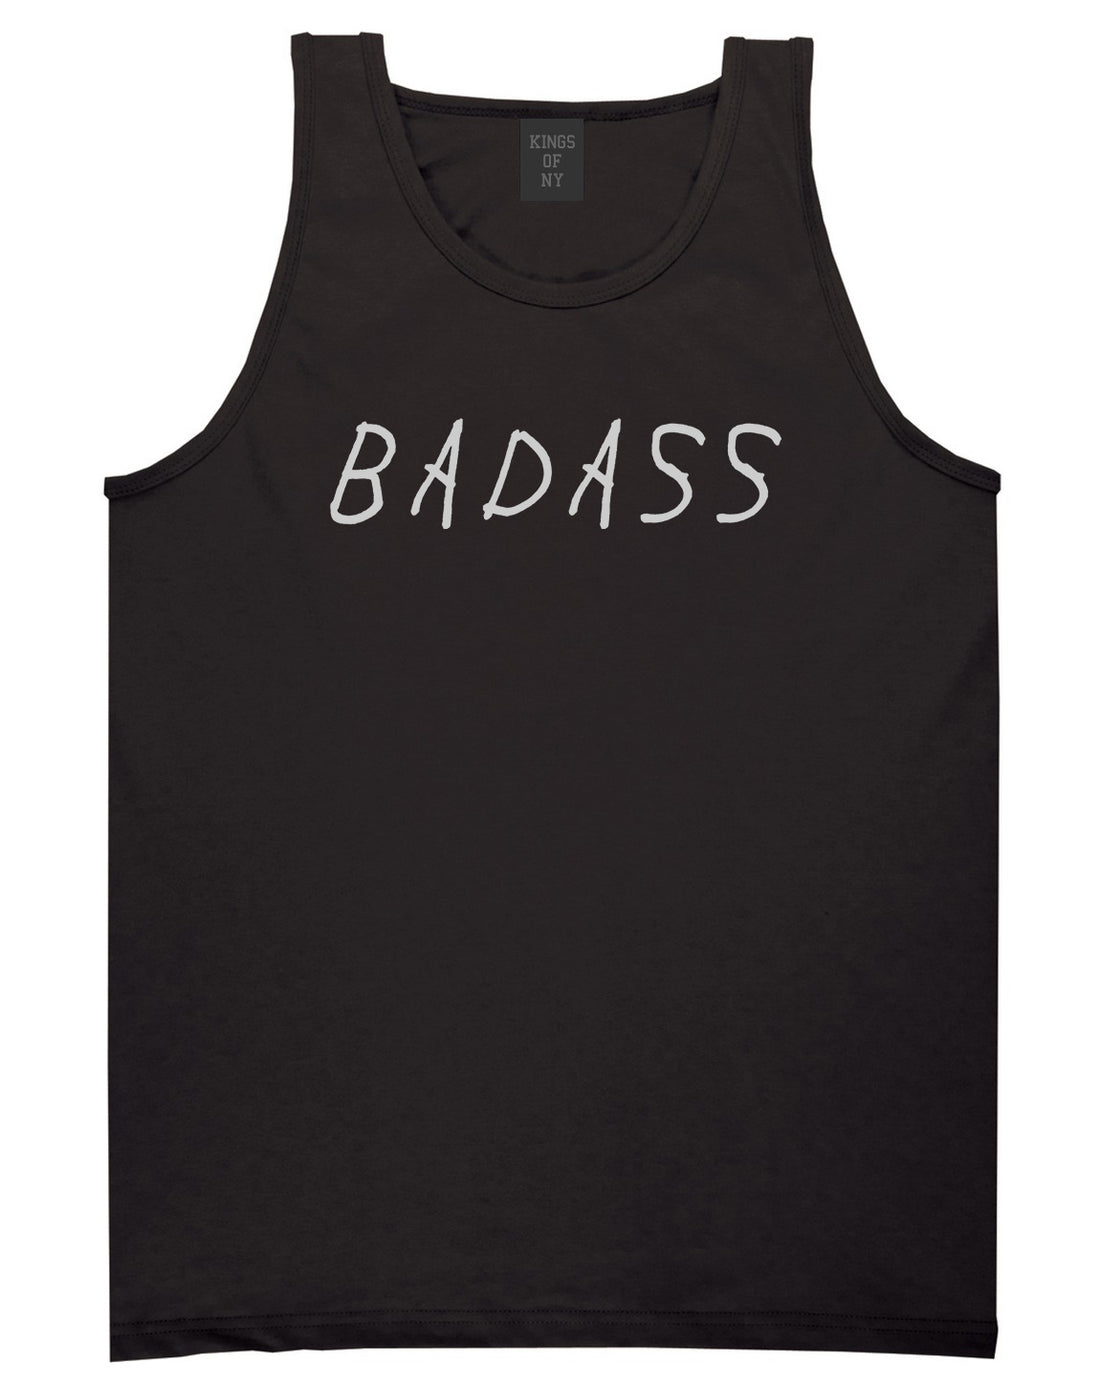 Badass Black Tank Top Shirt by Kings Of NY